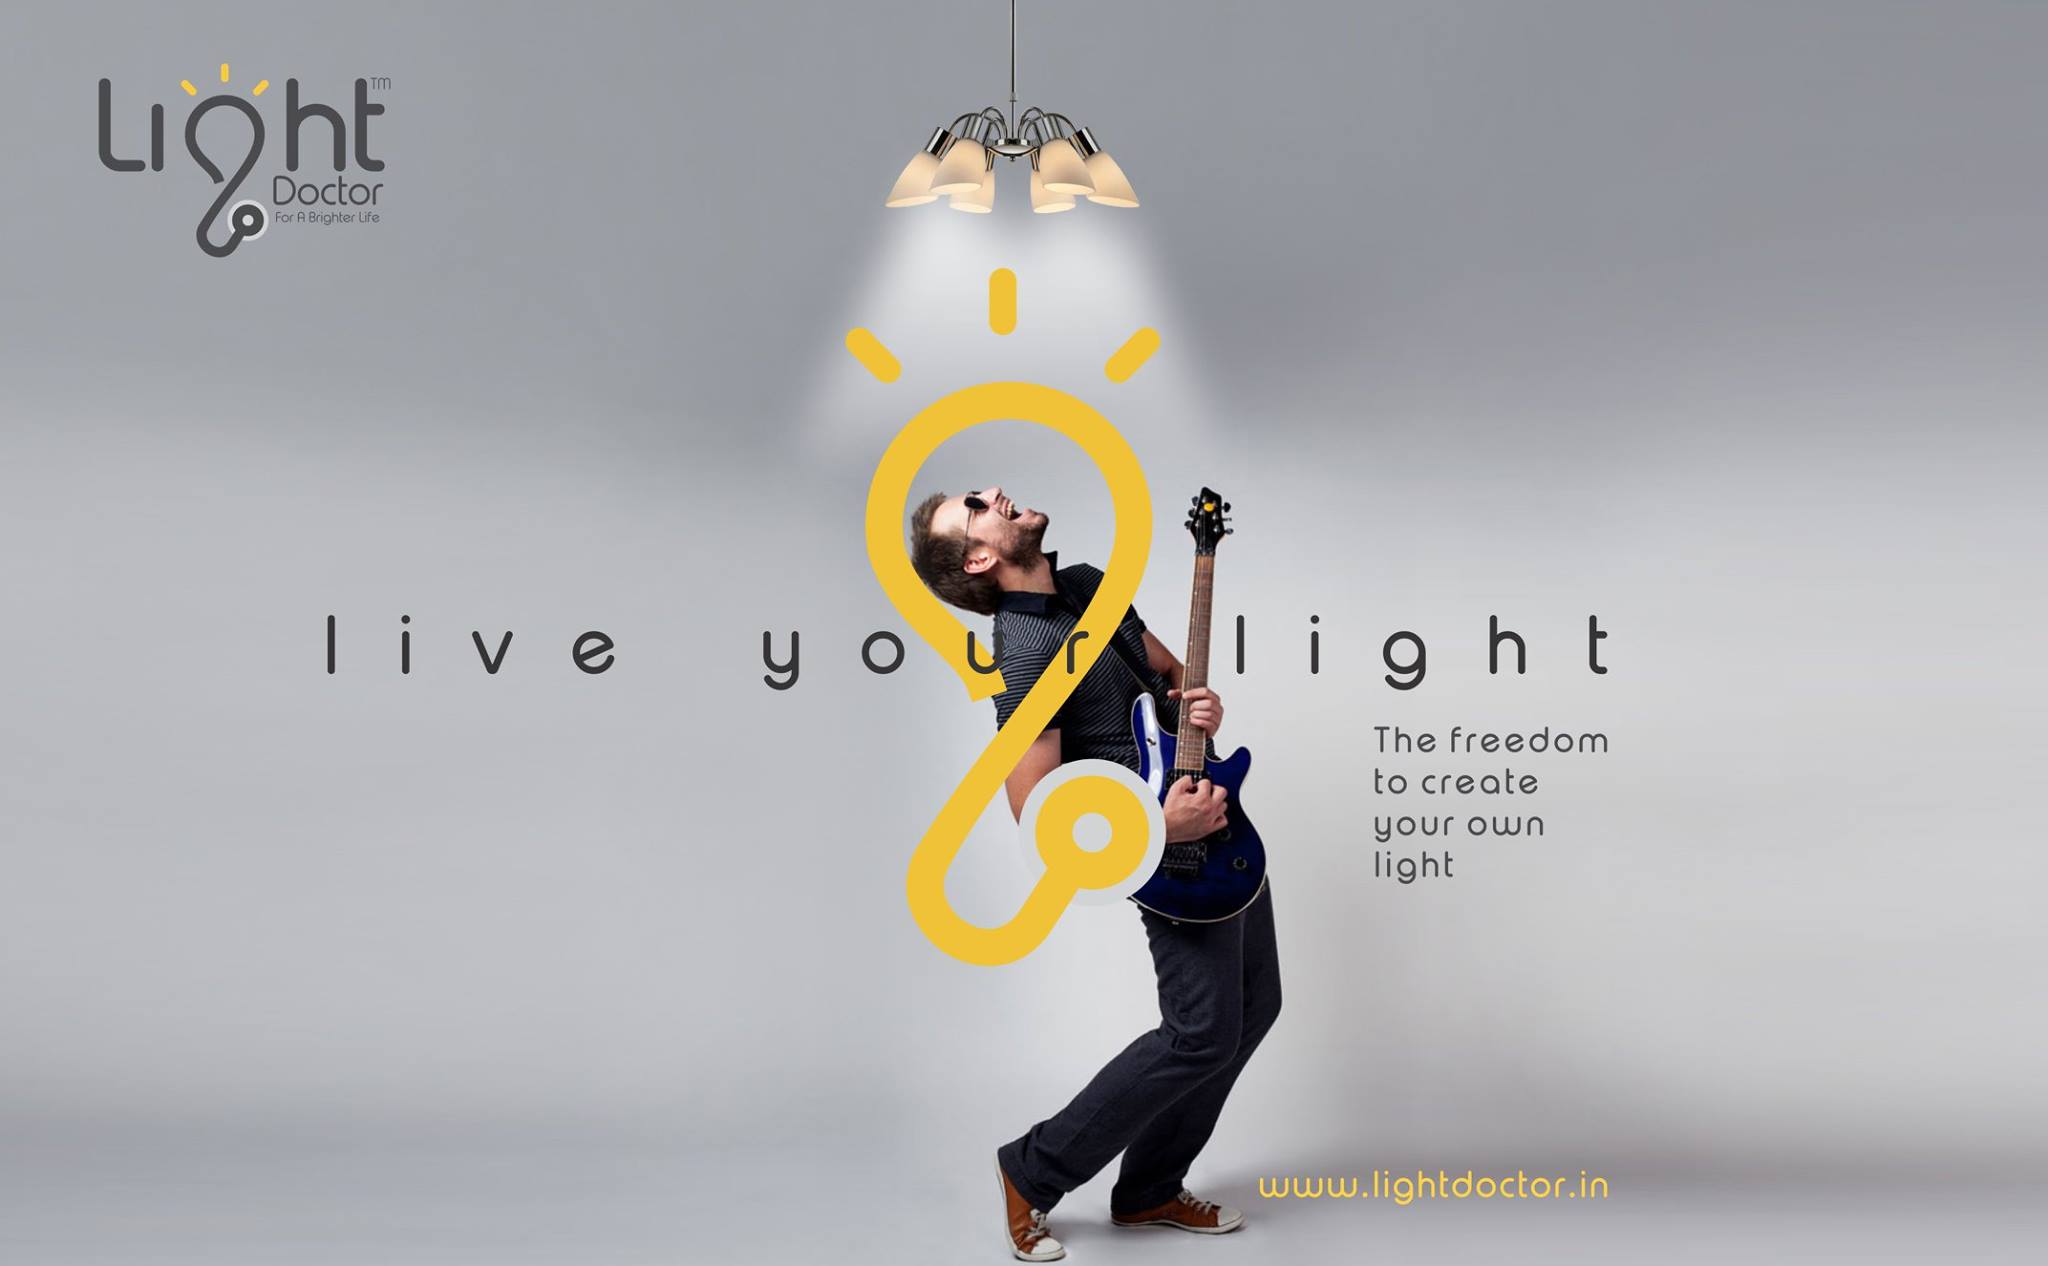 Light Doctor website design